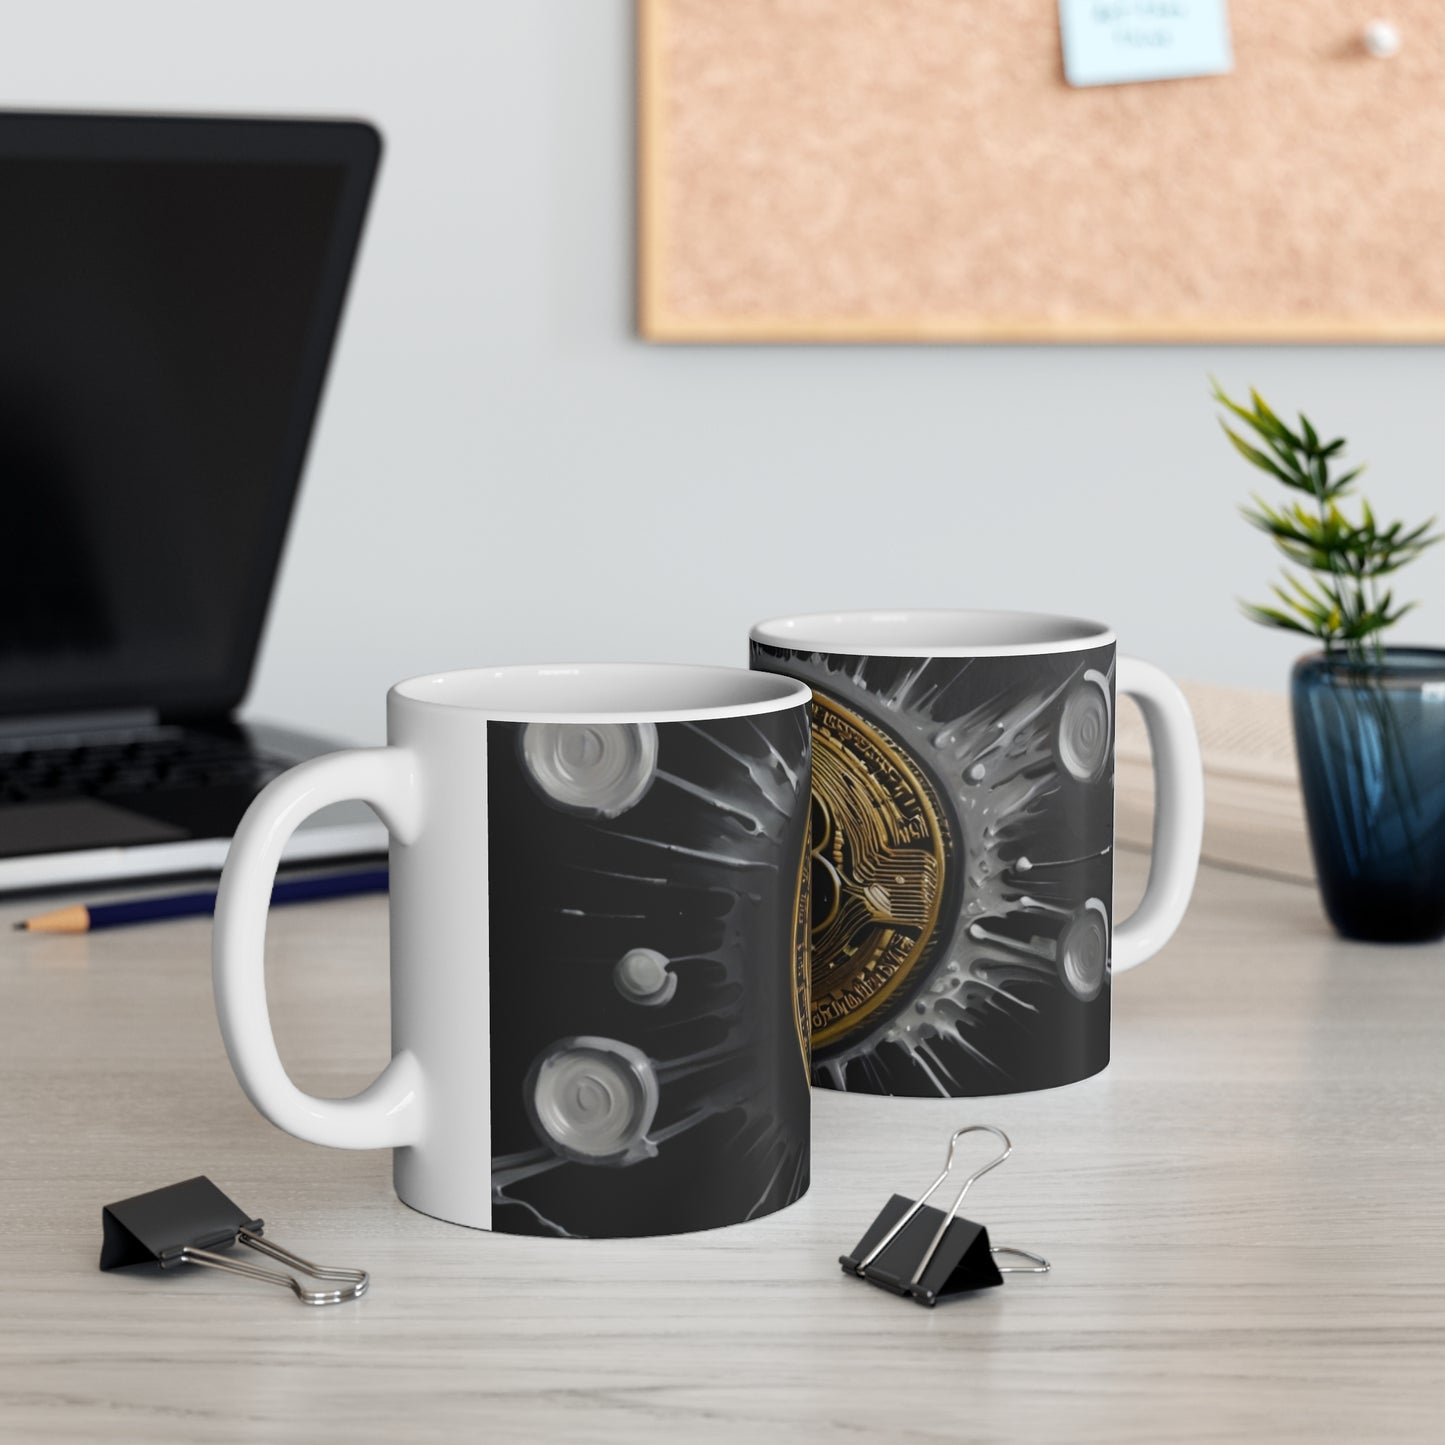 Bitcoin Greyscale Paint Background Mug - Ceramic Coffee Mug 11oz